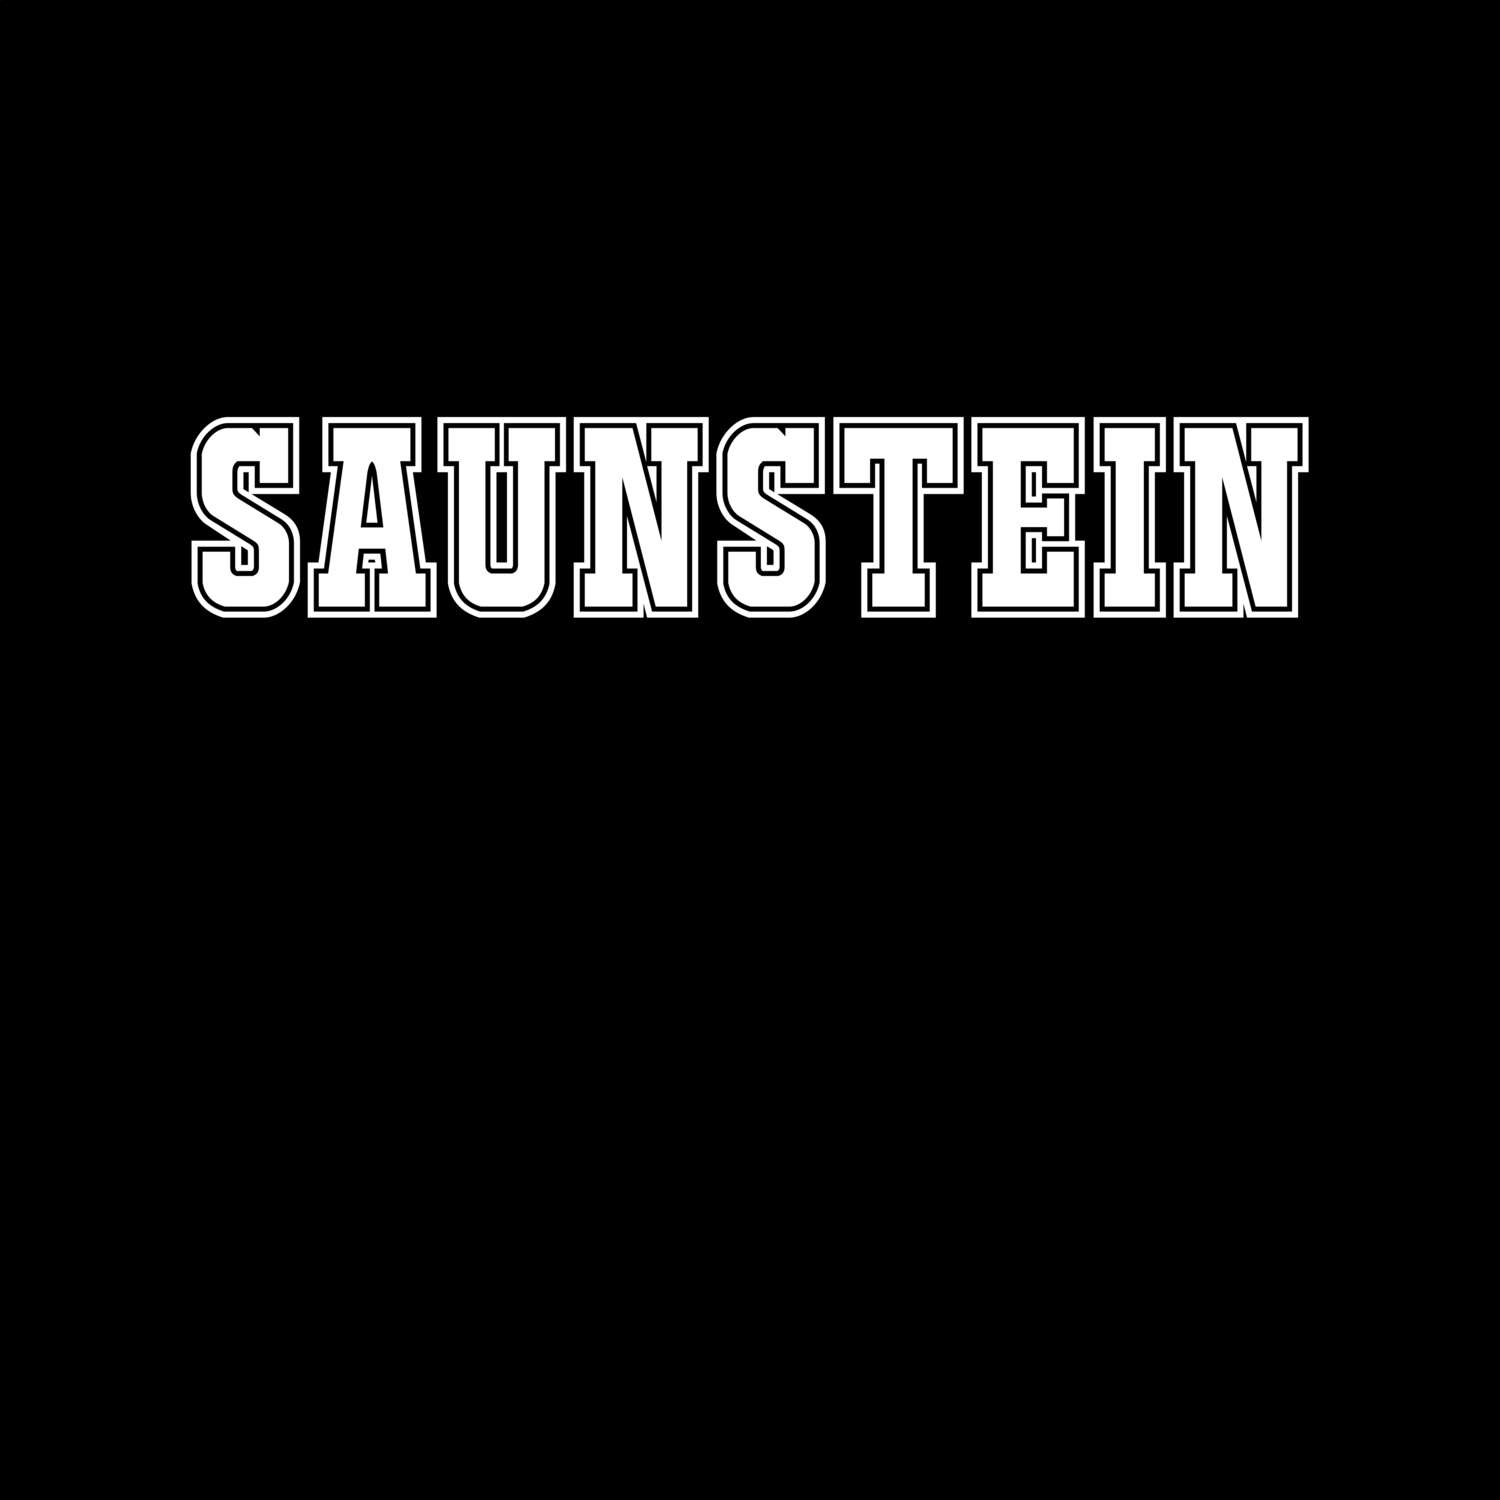 Saunstein T-Shirt »Classic«